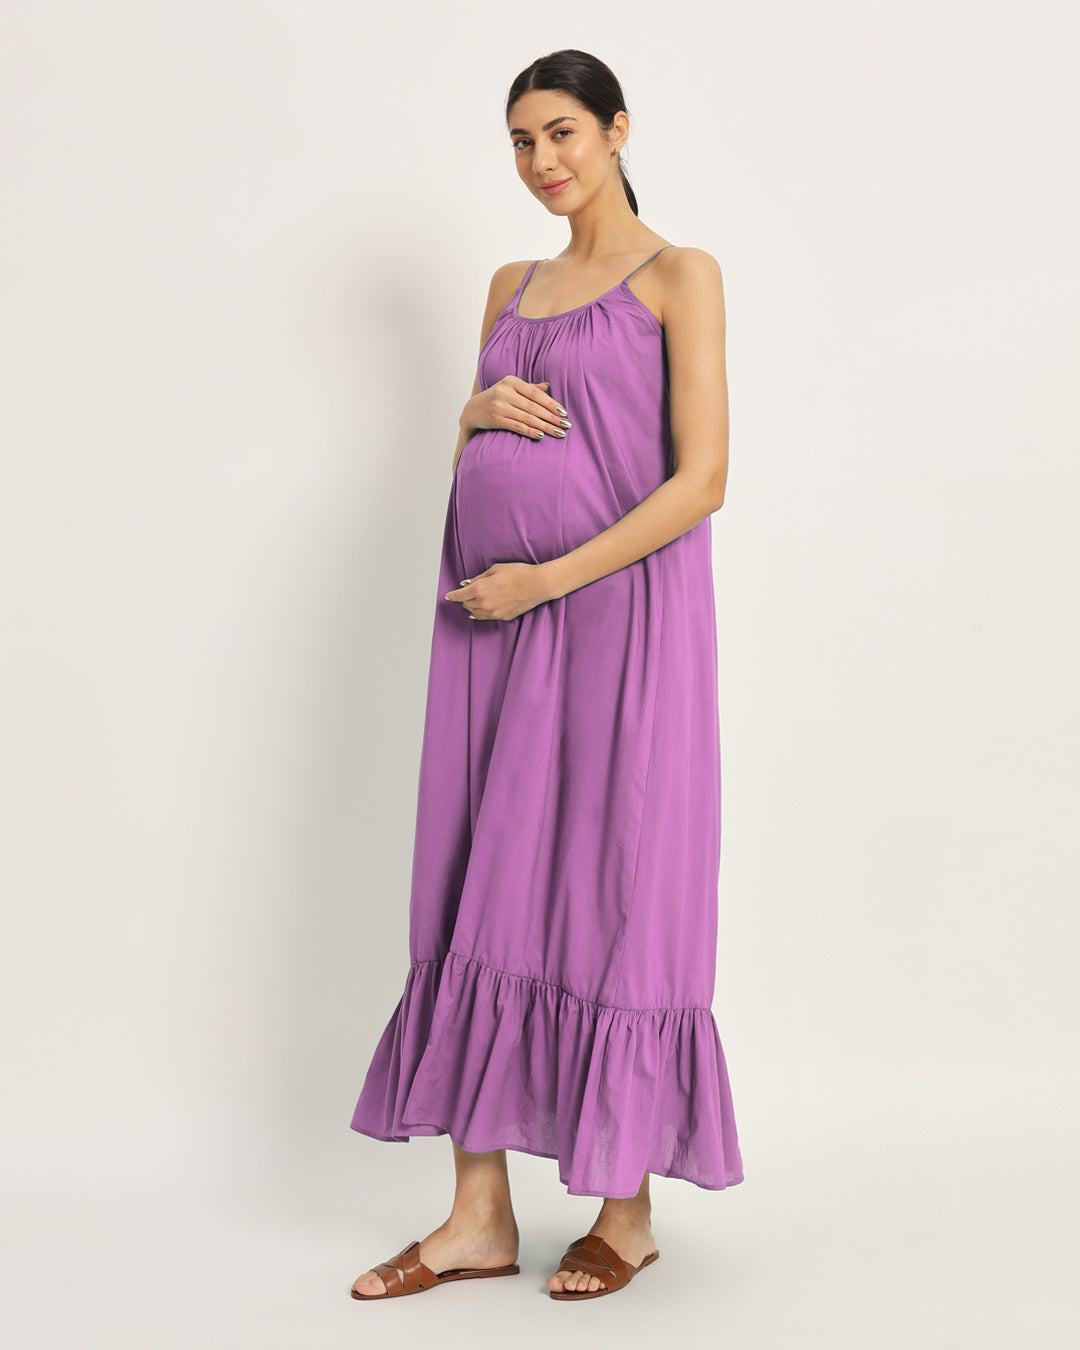 Wisteria Purple Belly Laugh Maternity & Nursing Dress